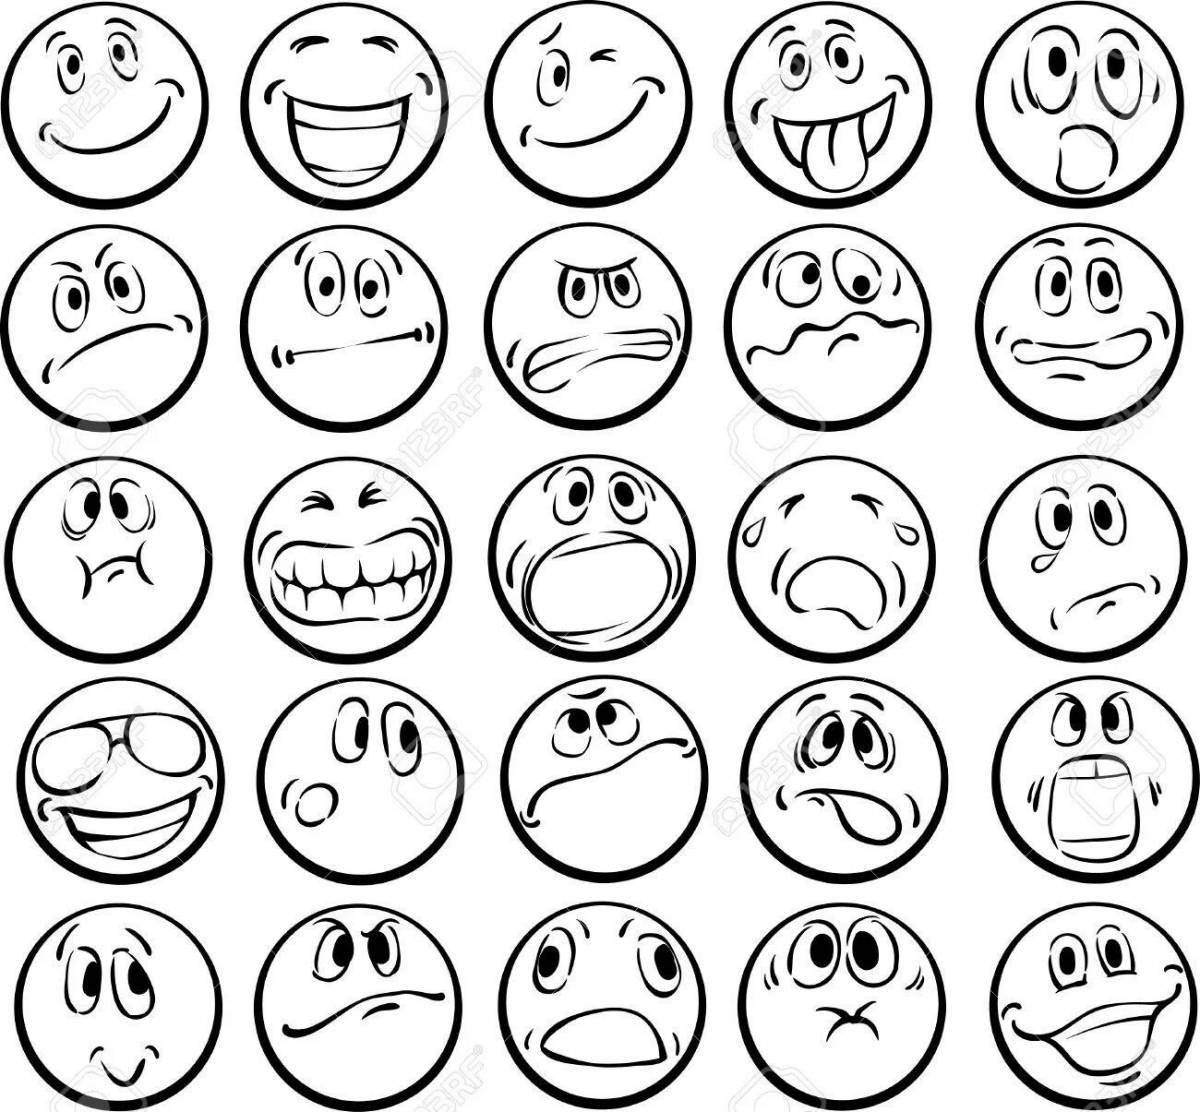 Excited emoji coloring page